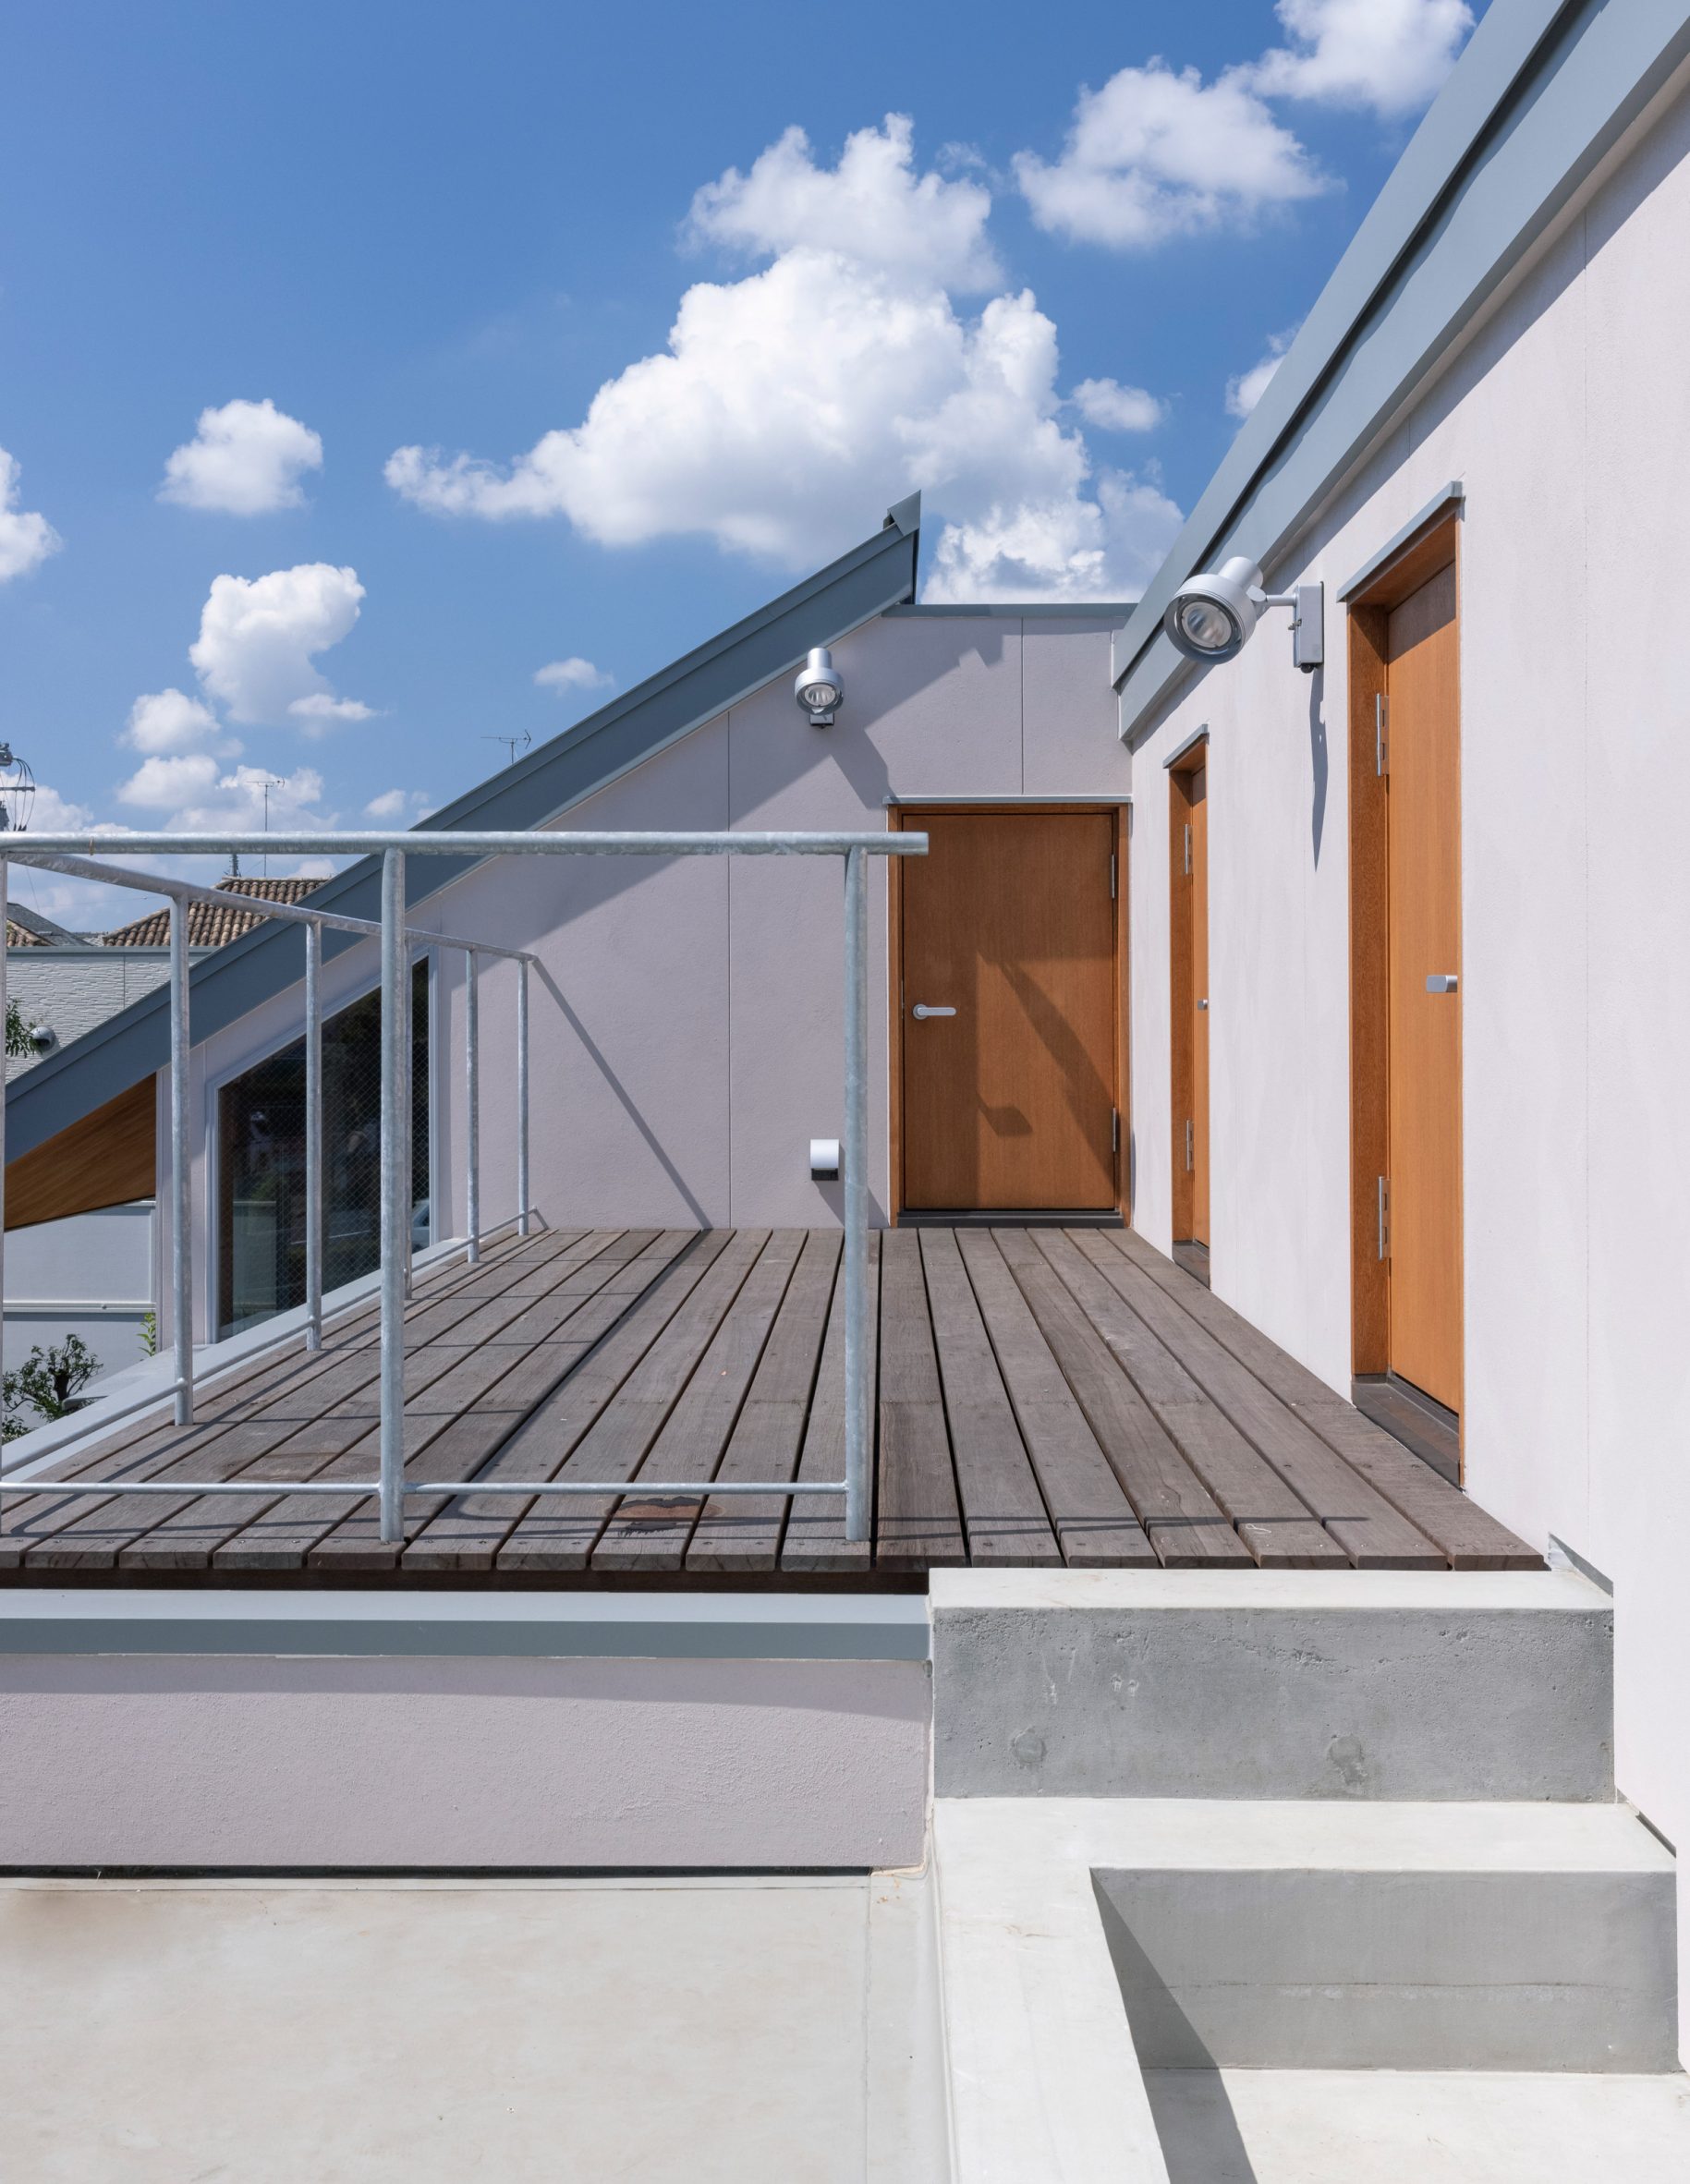 Wooden roof terrace